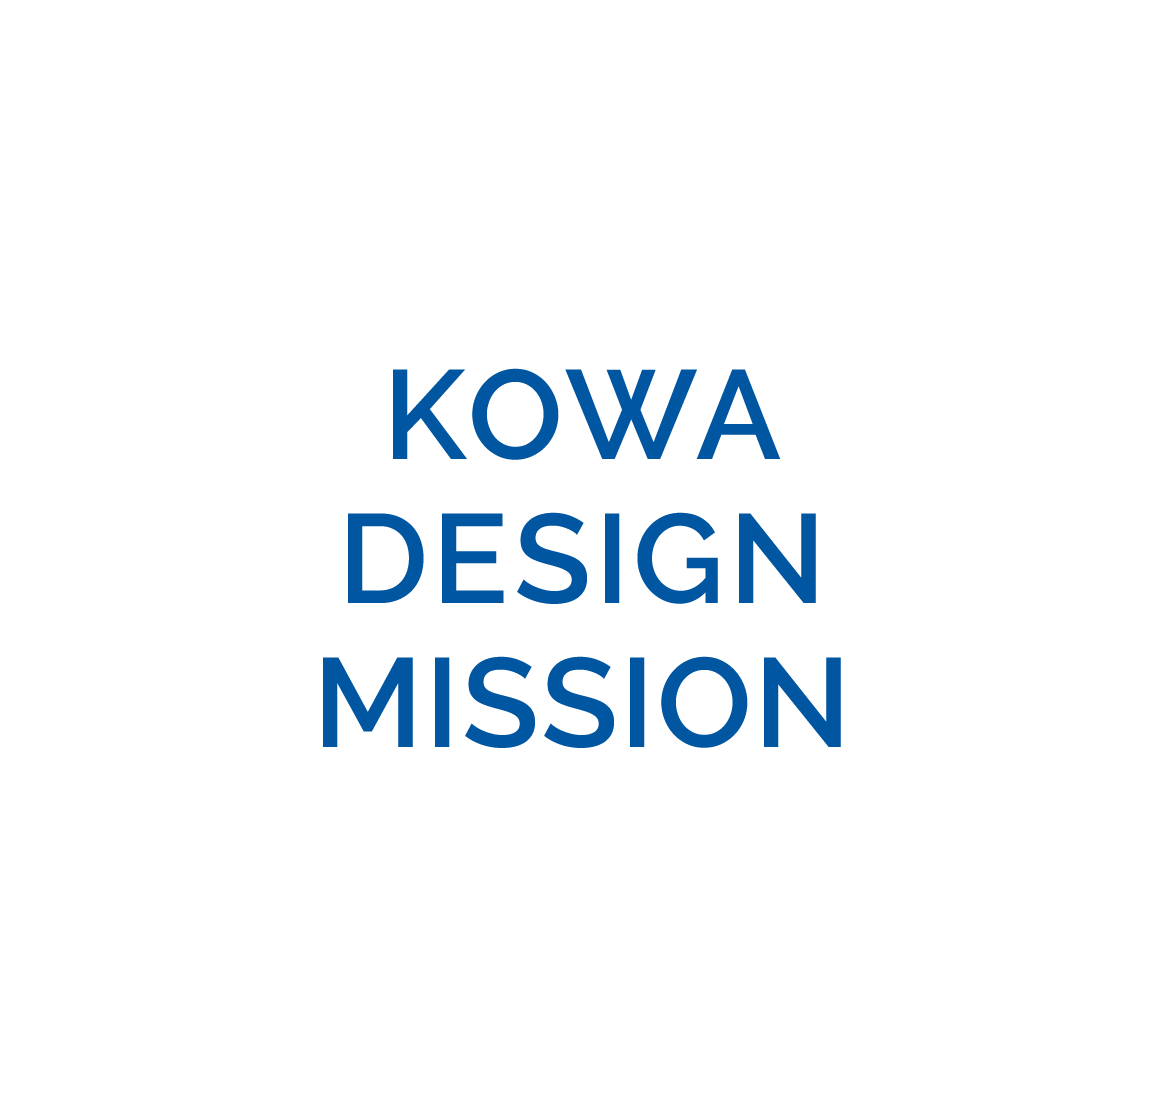 Kowa Design Mission